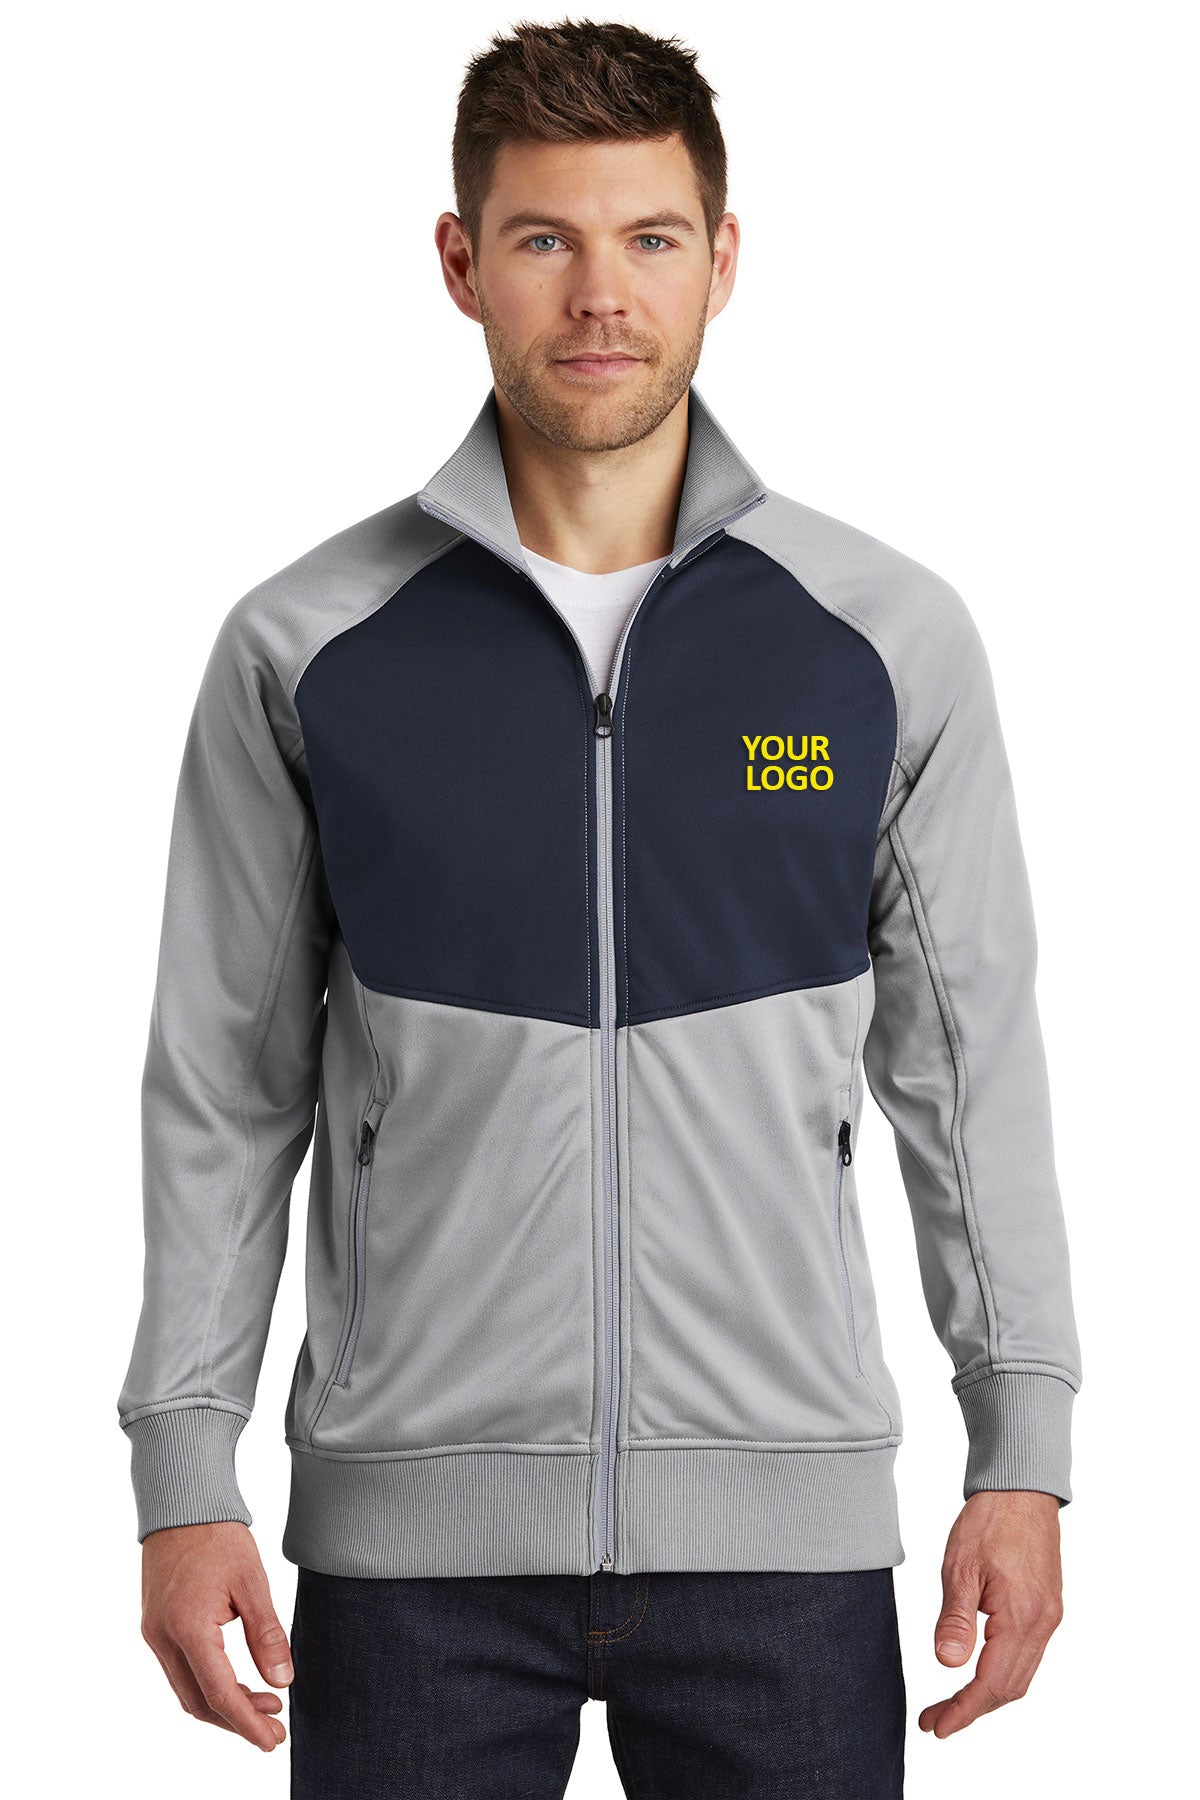 The North Face Mid Grey/ Urban Navy NF0A3SEW company logo jackets